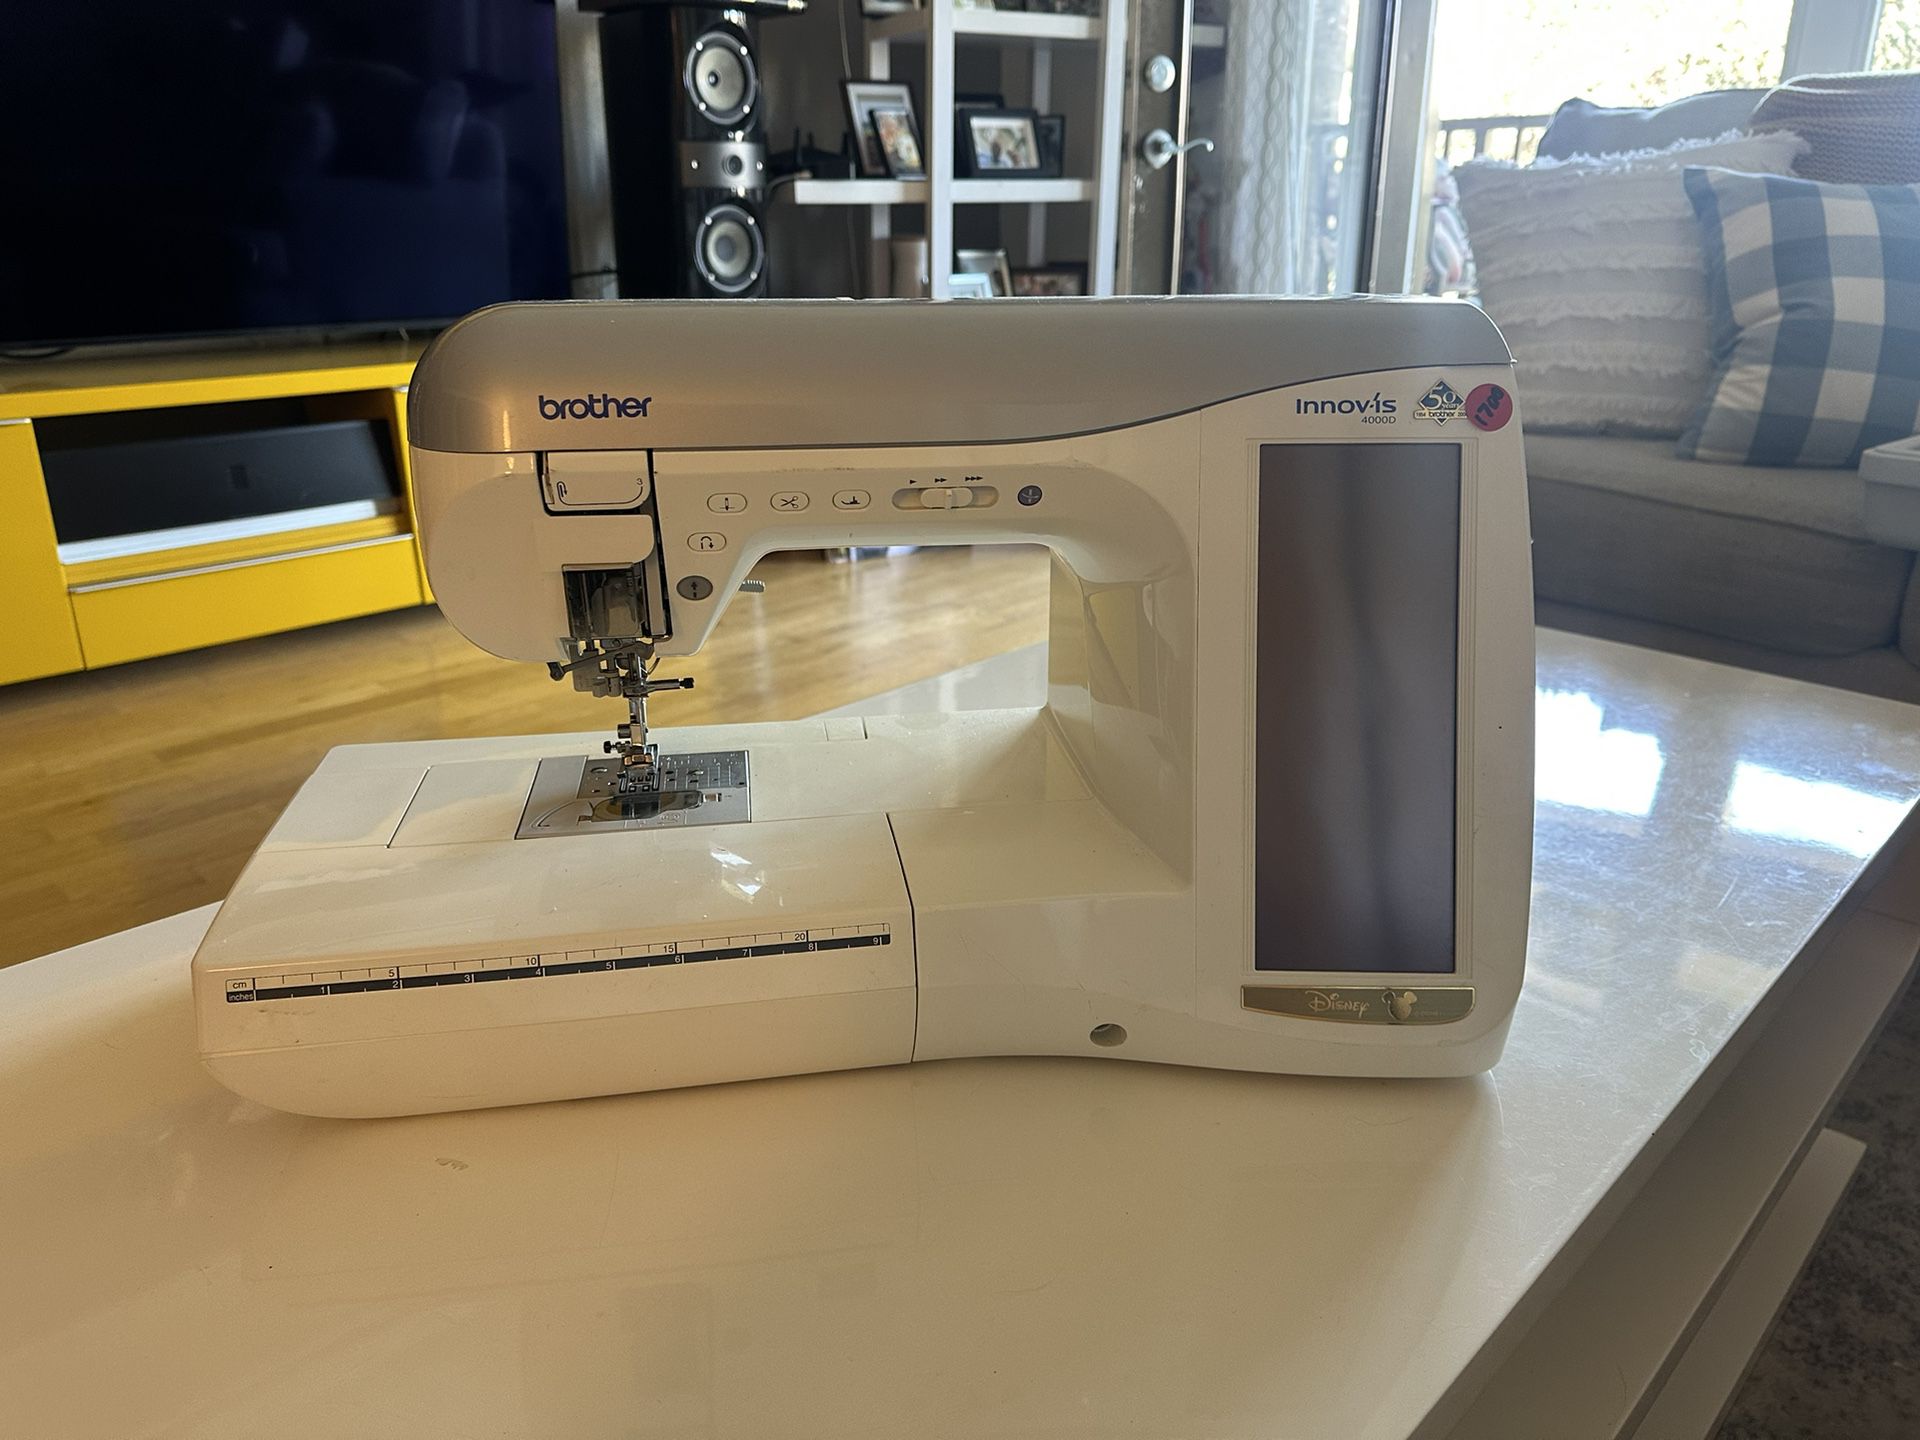 Disney Innovis NV4000d Sewing Machine